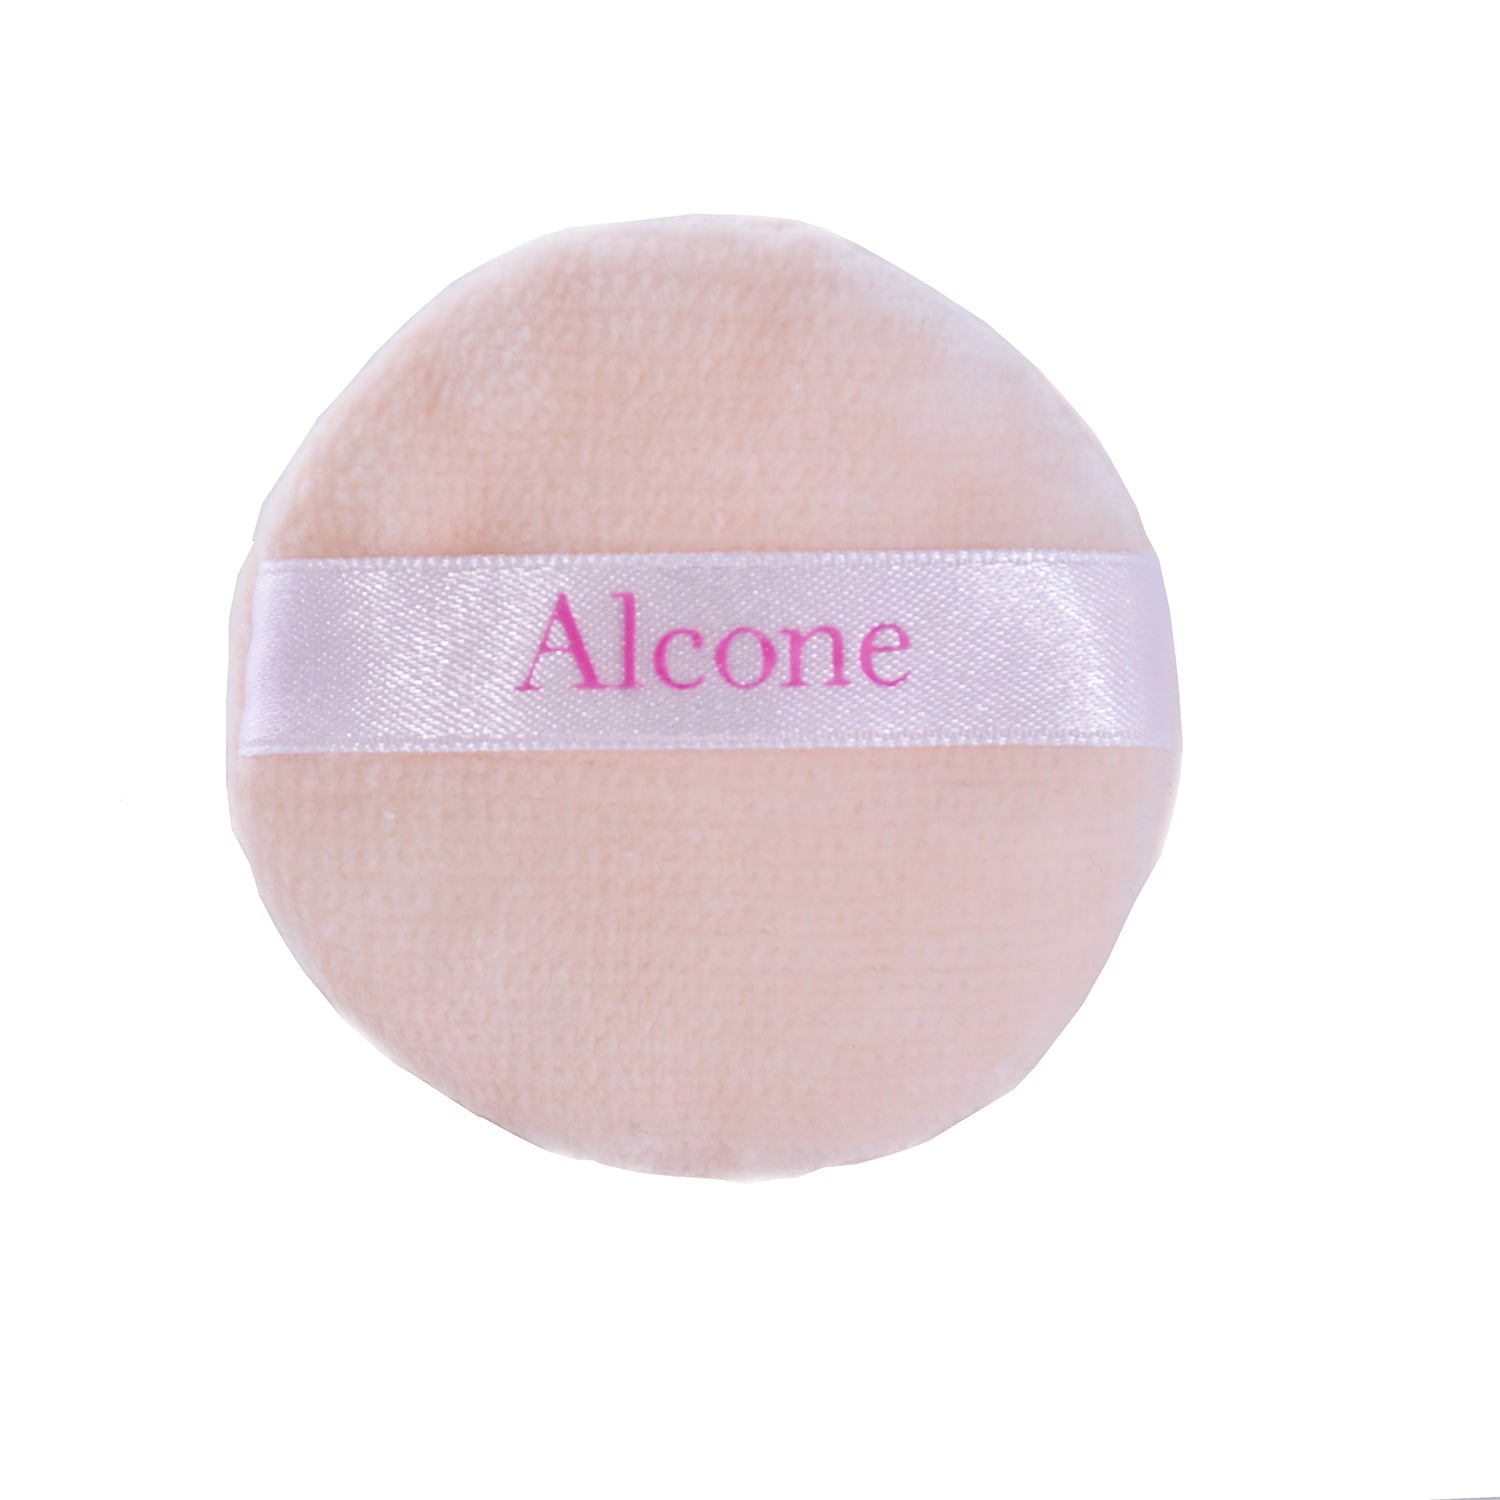 Alcone Company Powder Puffs - With Ribbon